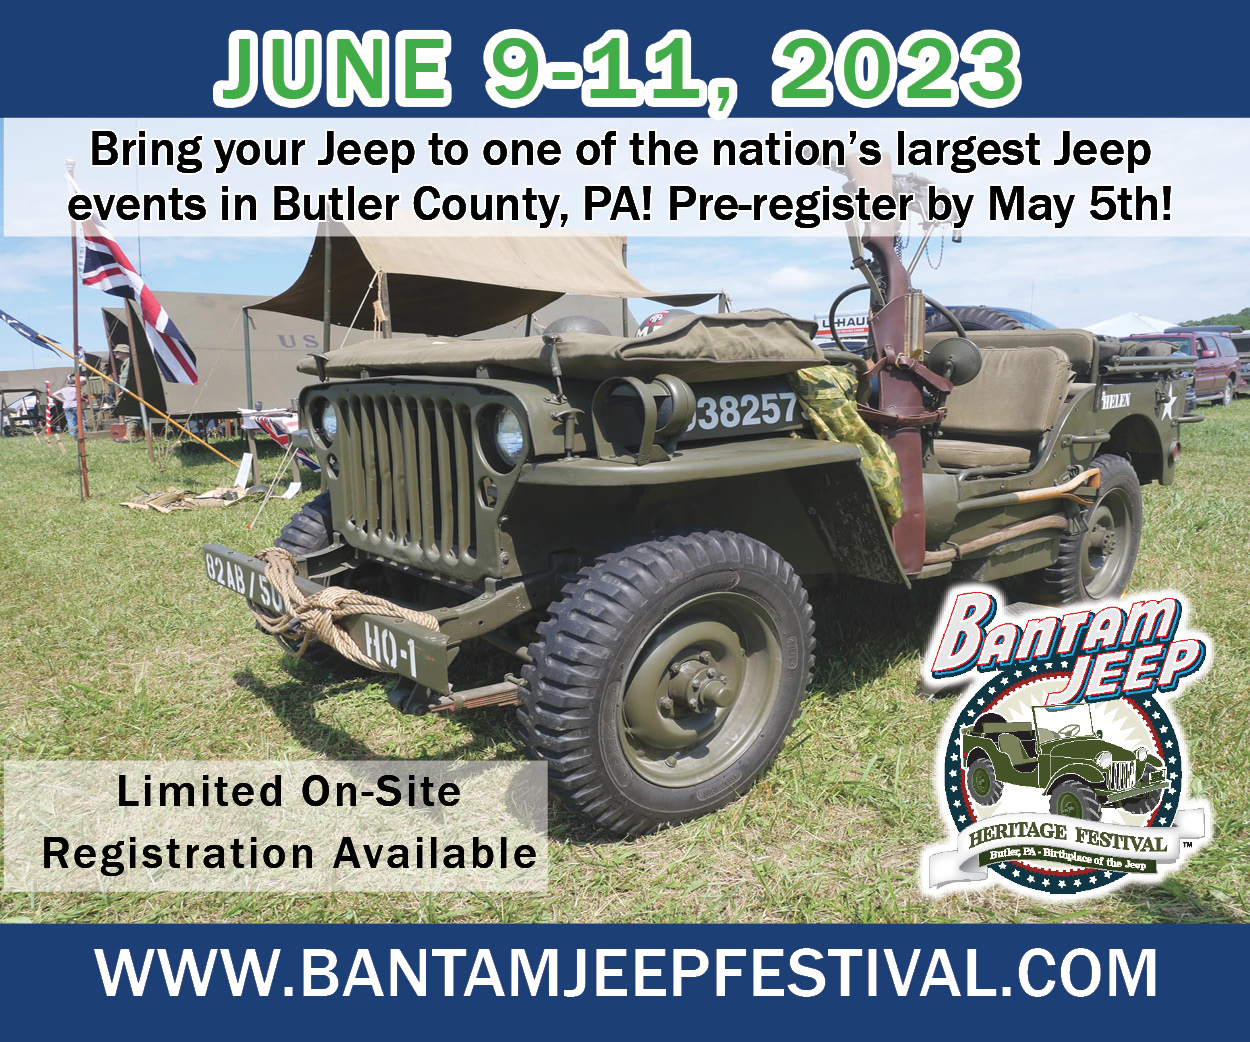 The Bantam Jeep Festival